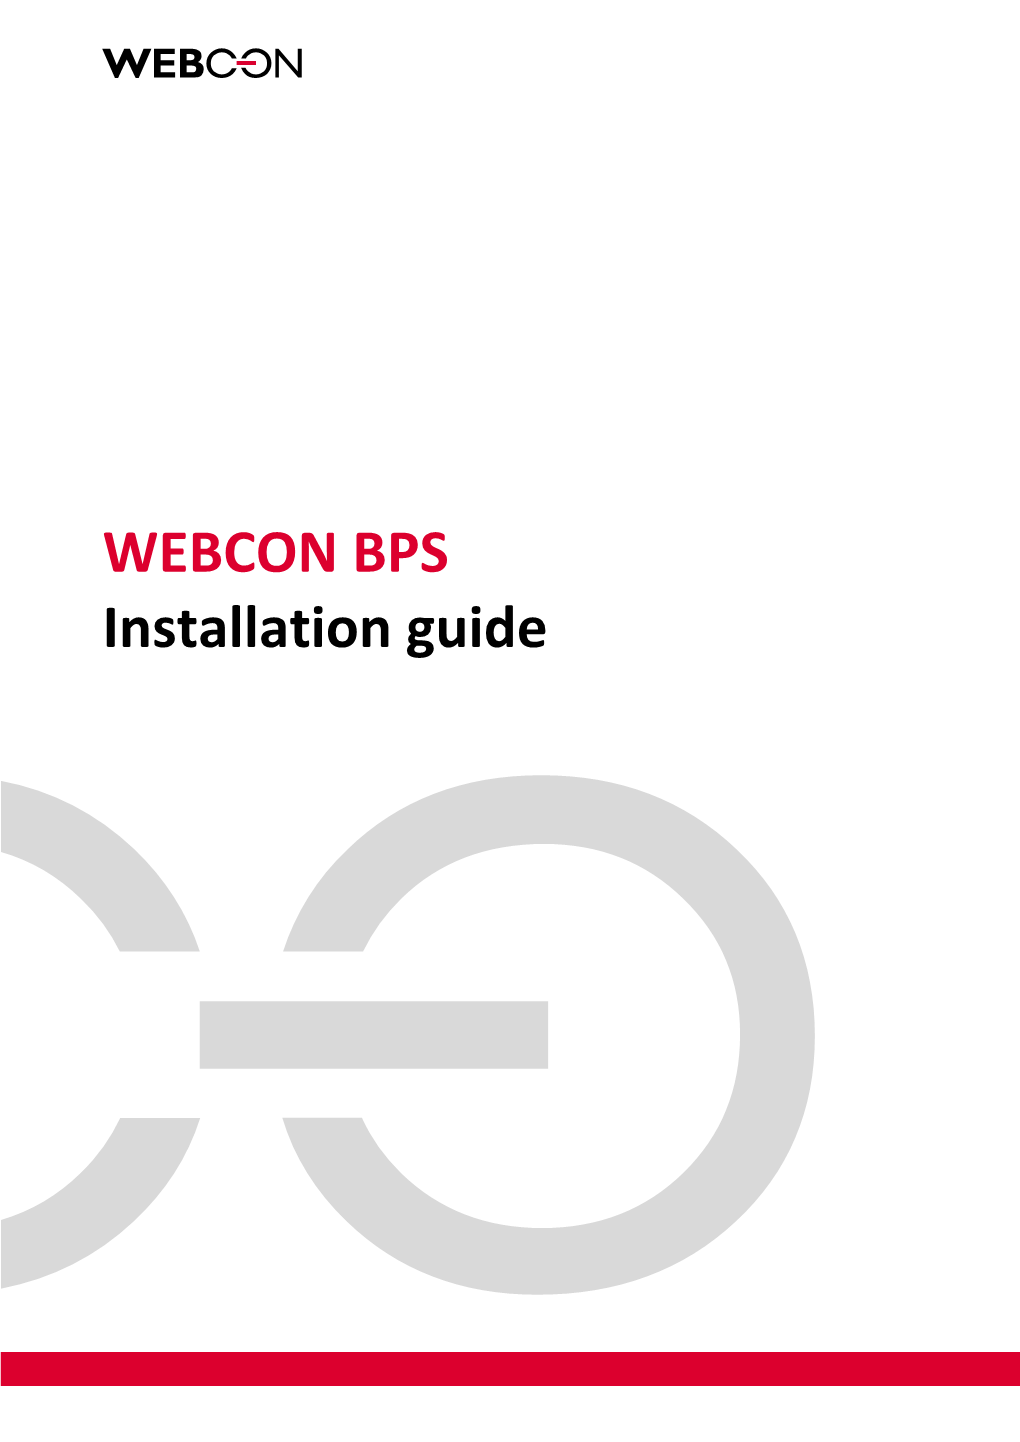 WEBCON BPS Installation Guide